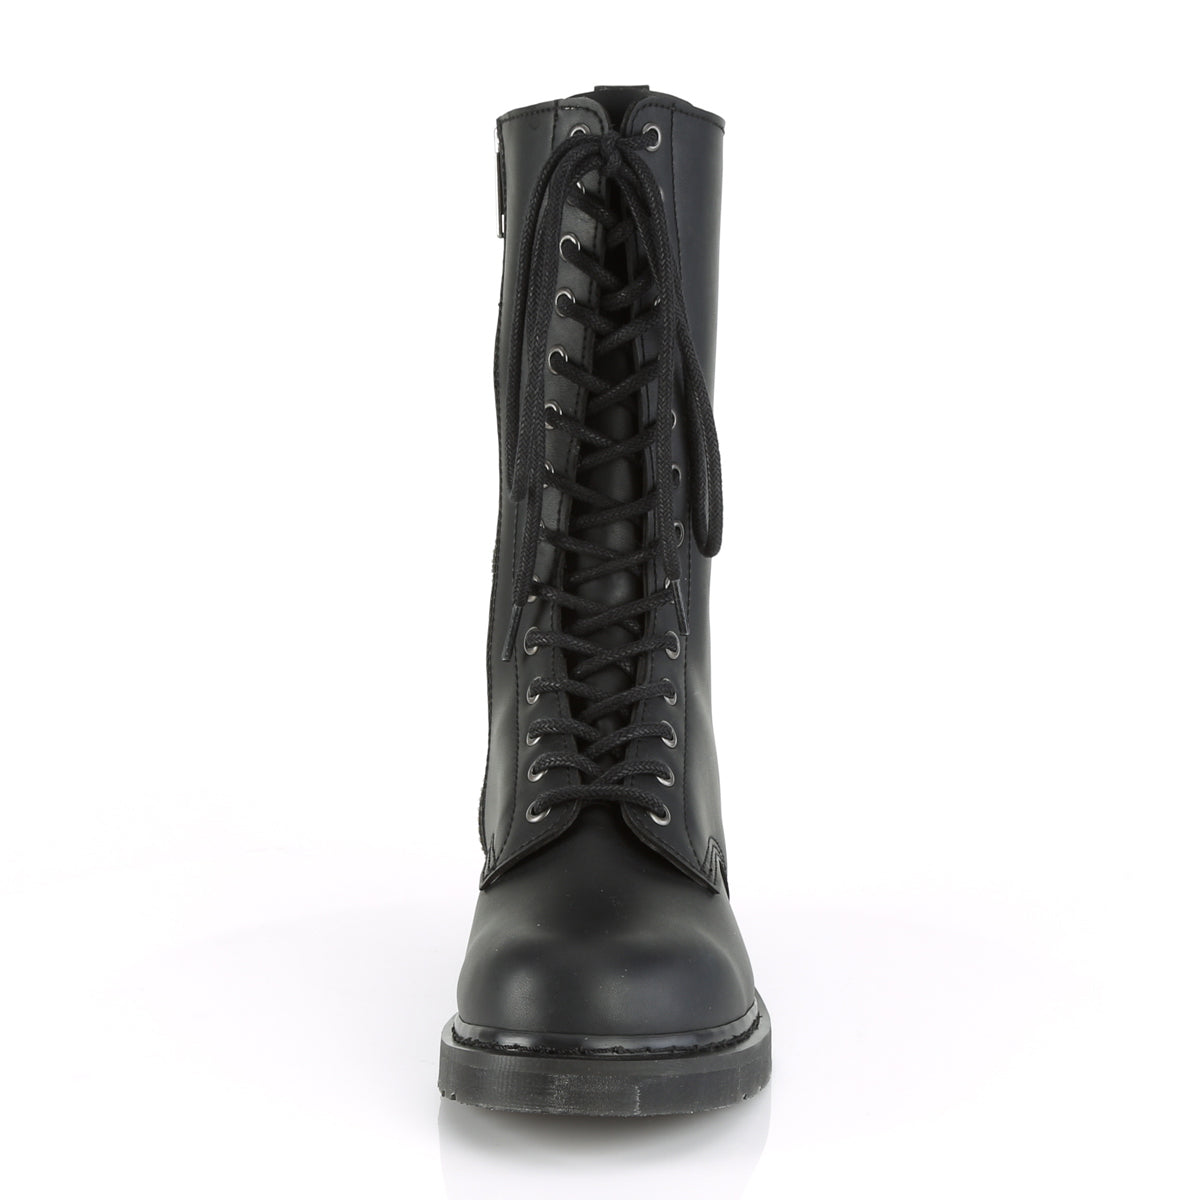 BOLT-300 Black Vegan Leather Mid-Calf Boot Demonia